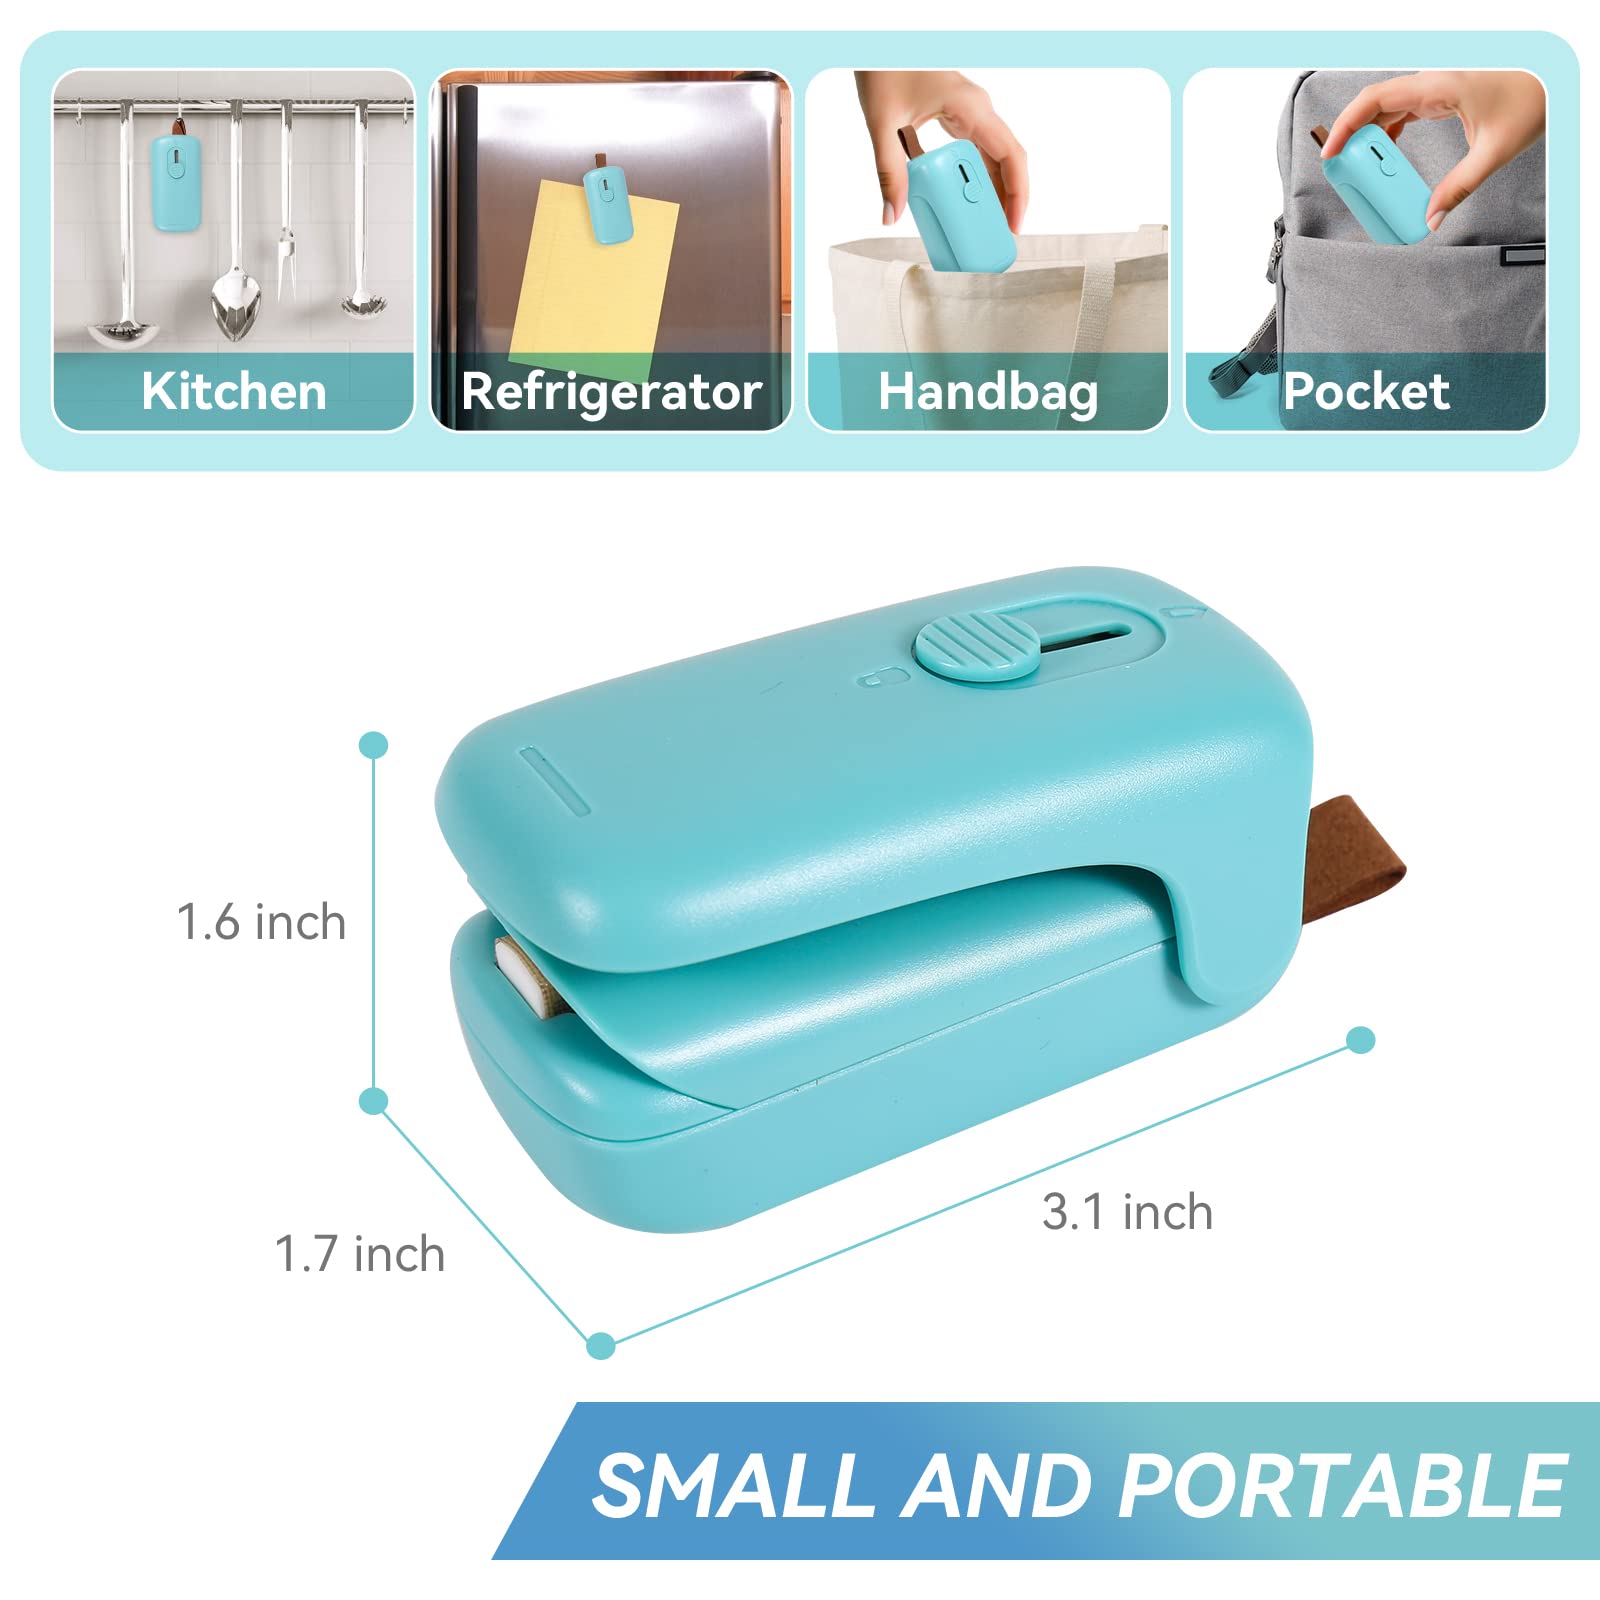 Mini Bag Sealer, ROMSTO Handheld Heat Vacuum Sealer, 2 in 1 Sealer and Cutter with Lanyard, Portable Resealer Machine for Plastic Bags Food Storage Snacks Freshness (2xAA Batteries Included)